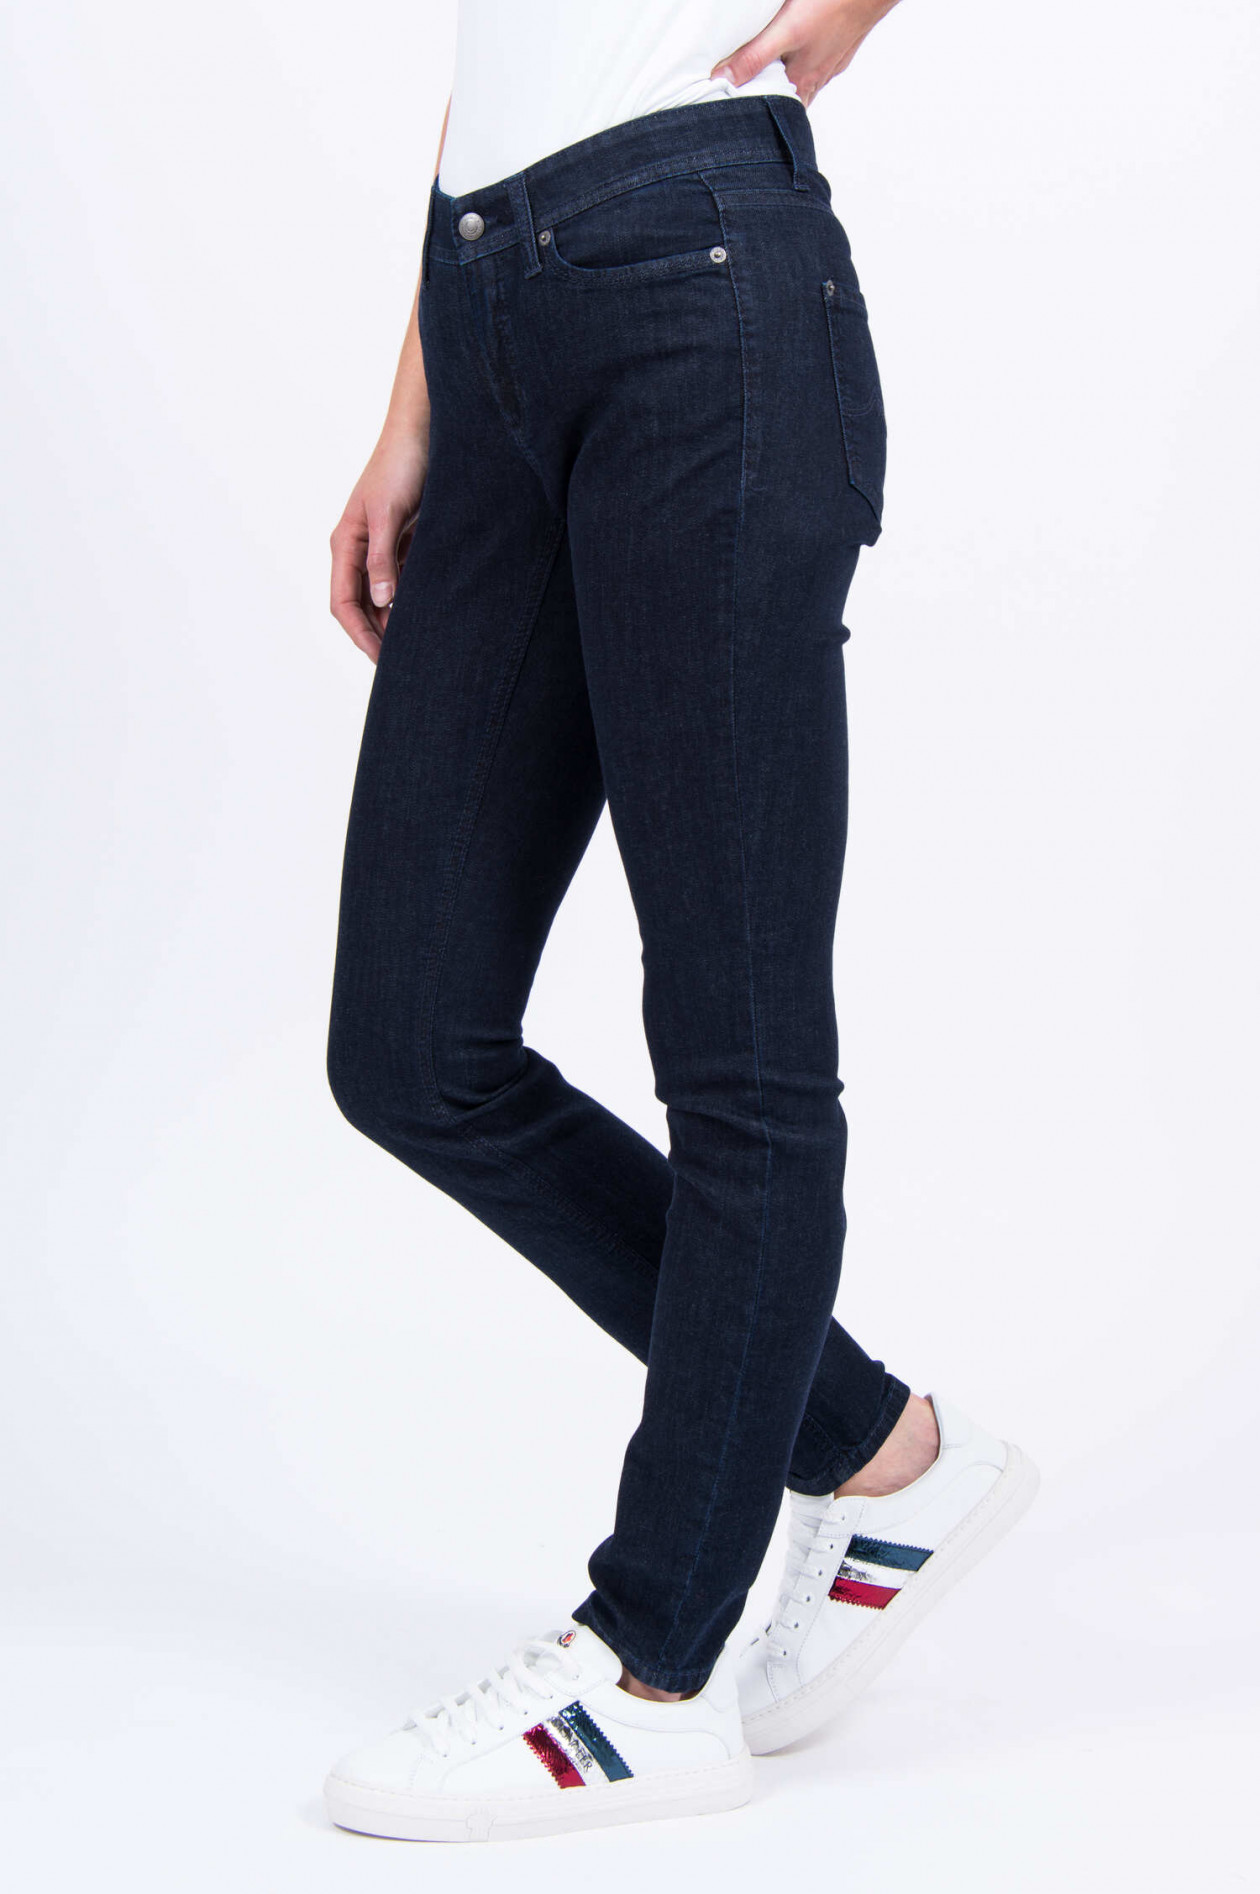 Chromatisch draadloos droefheid Cambio Jeans PARLA VINTAGE EDITION in Navy | GRUENER.AT